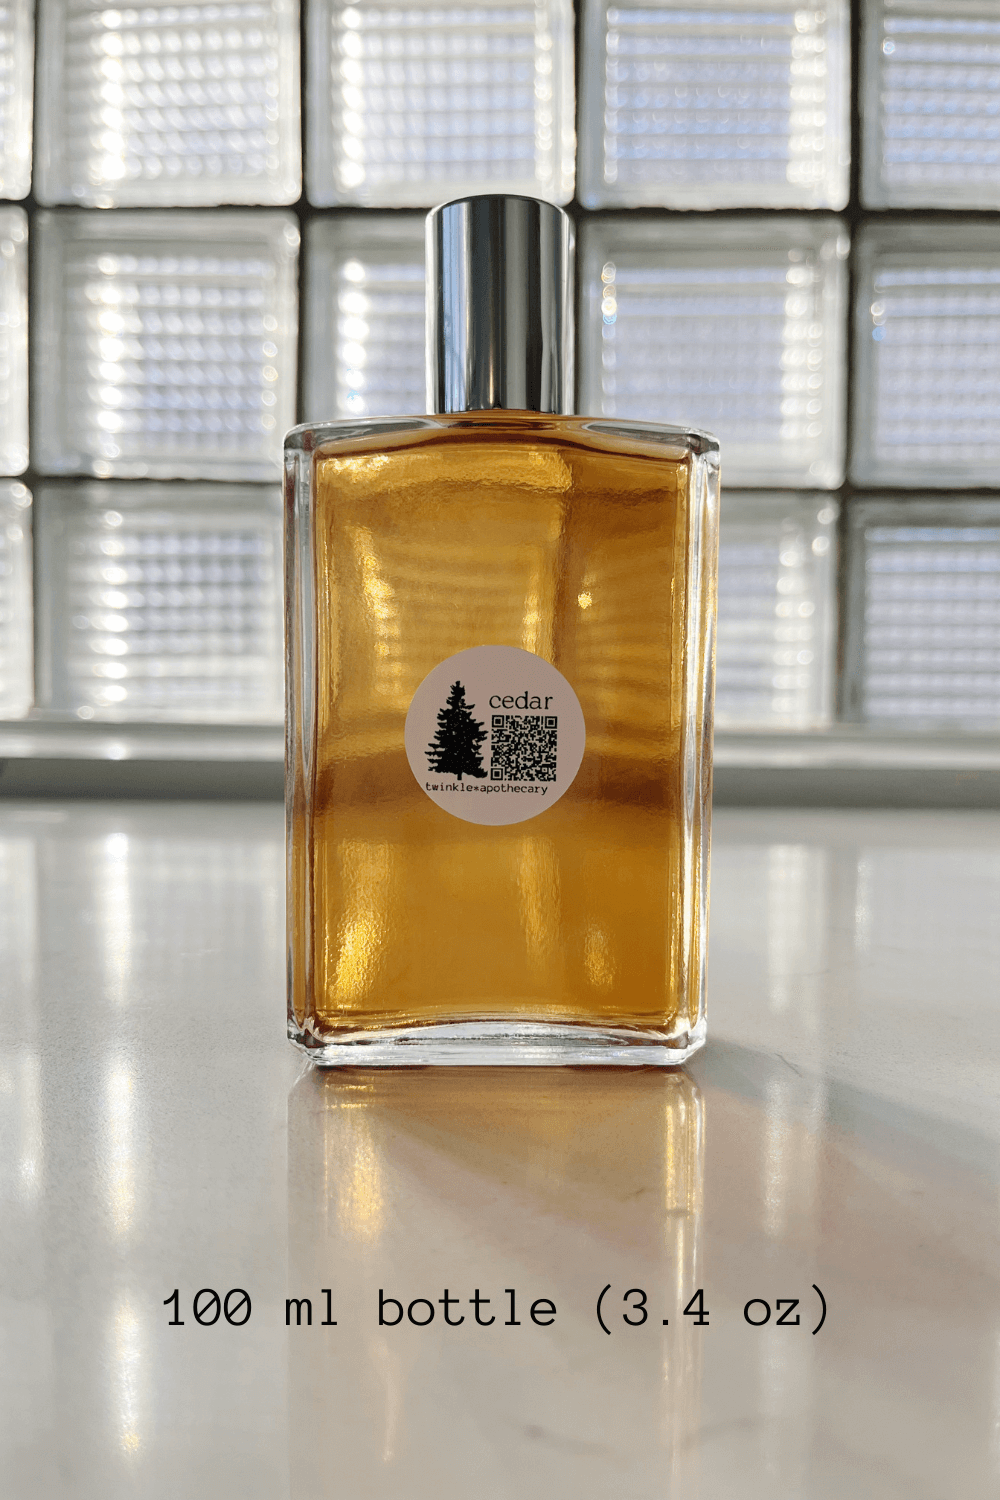 Zest: layering fragrance